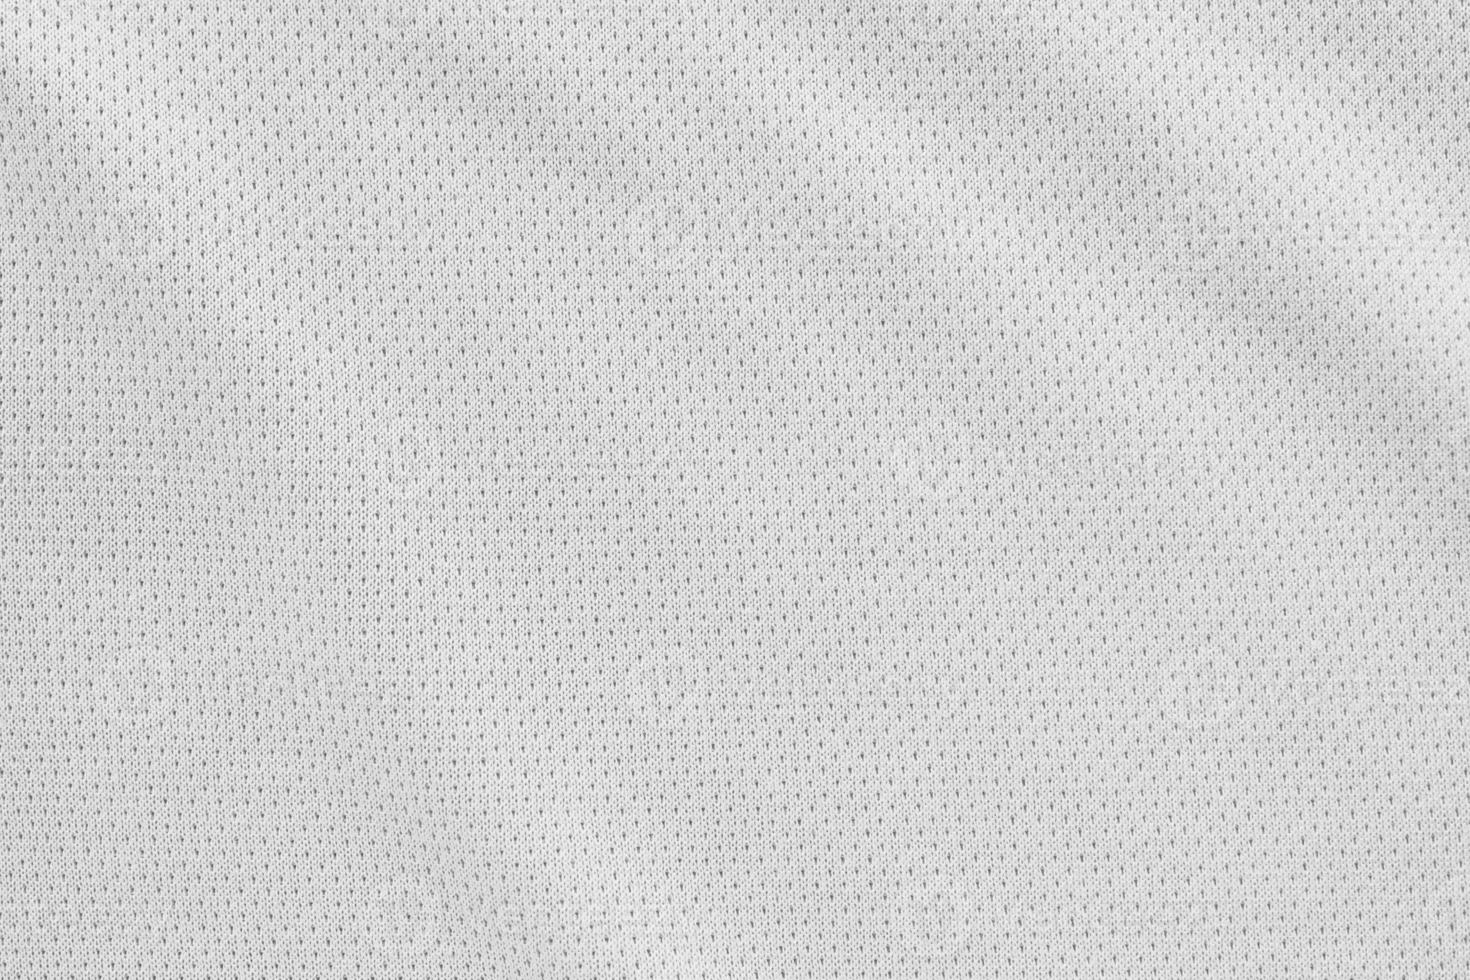 White sports wear jersey shirt clothing fabric texture photo